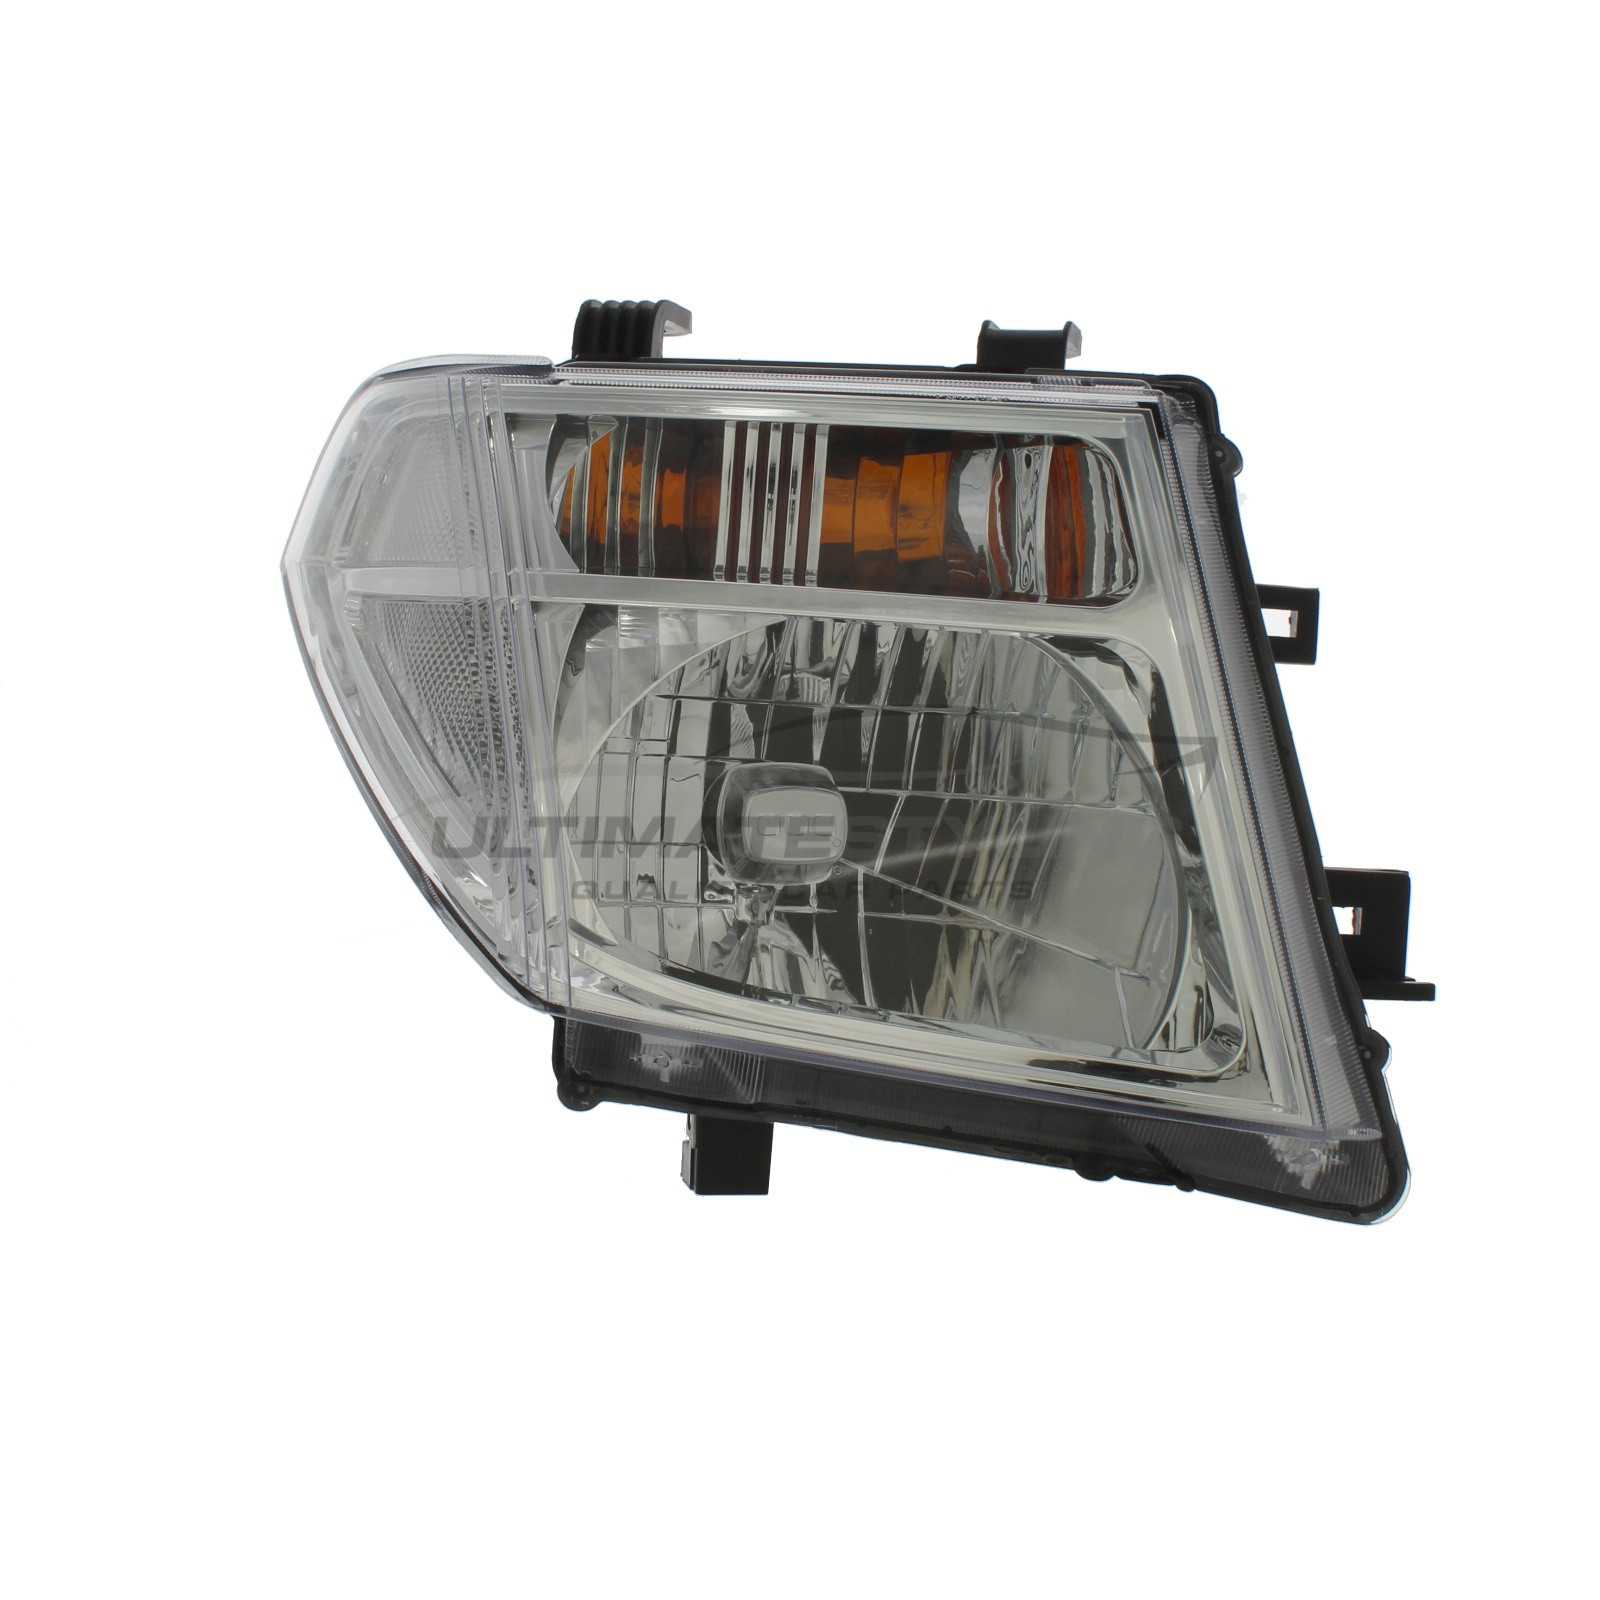 Headlight / Headlamp for Nissan Pathfinder